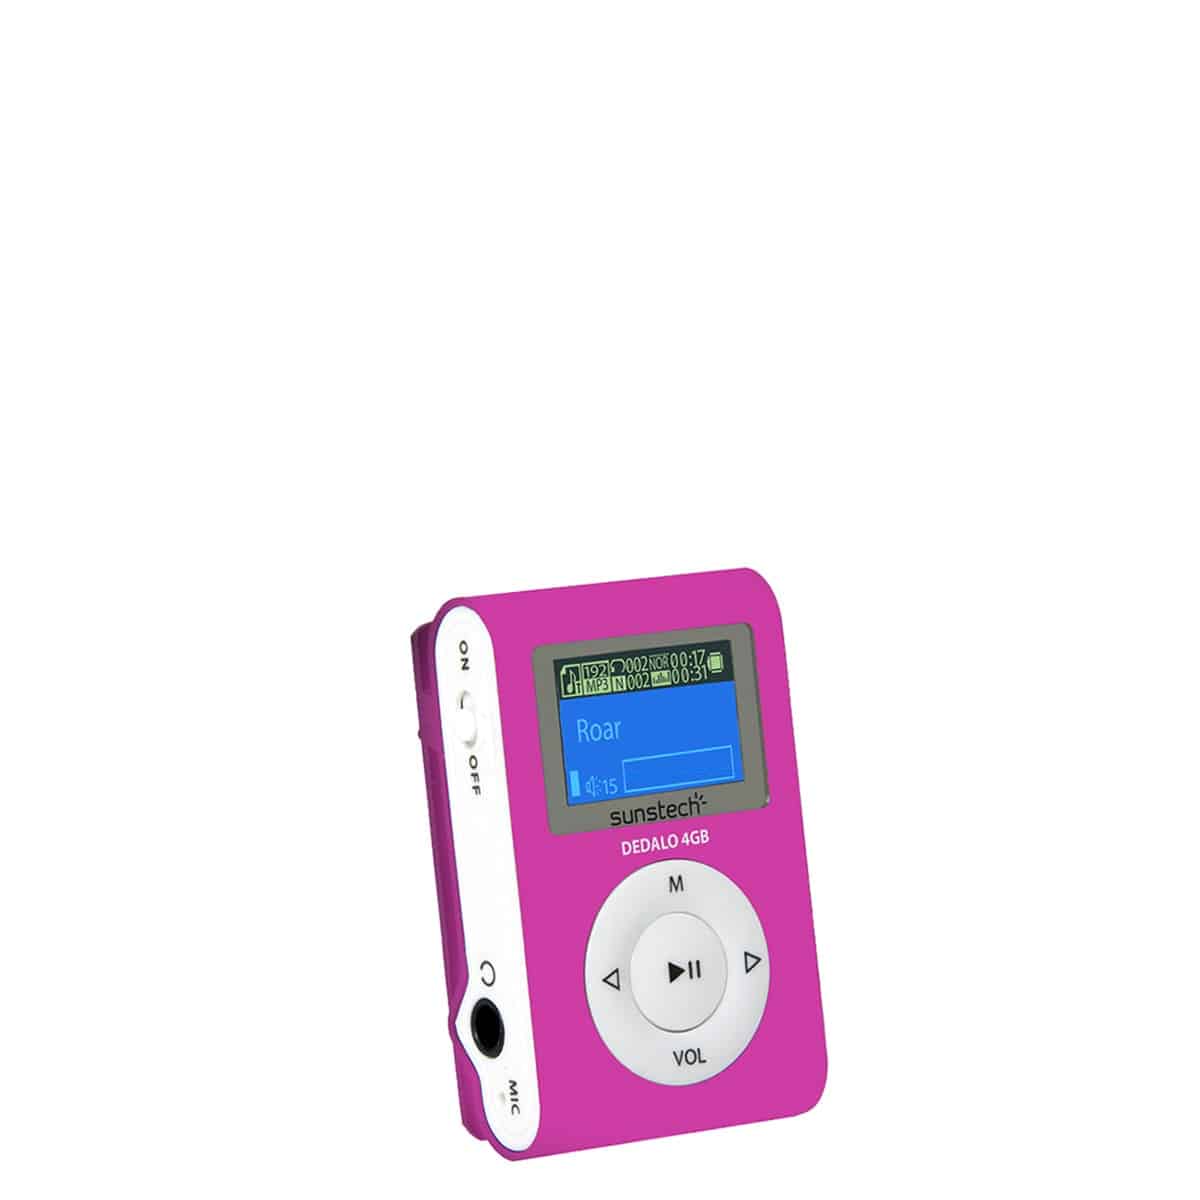 Reproductor MP3 Sunstech Dedalo III Rosa de 4 GB con radio FM